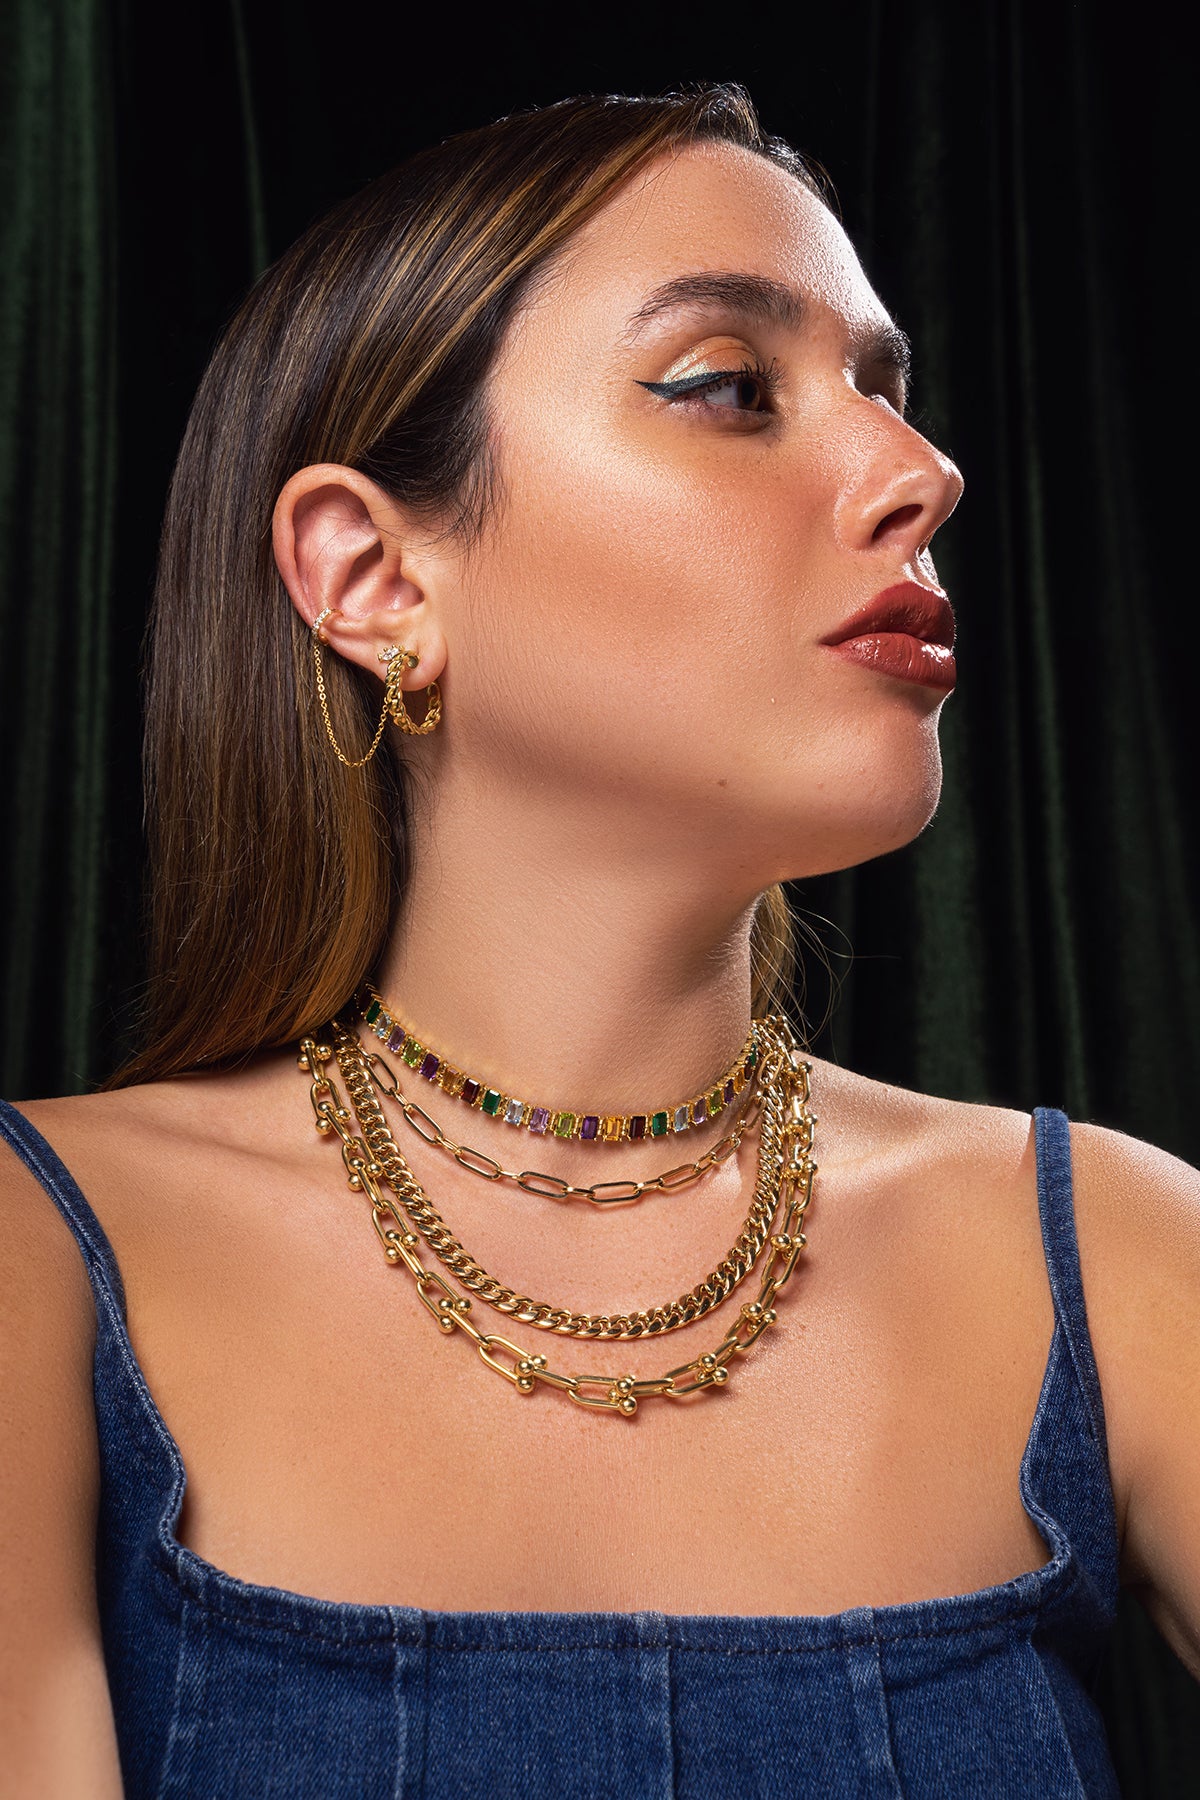 Diamond Chain and Hoops Stud Earrings in 18k Gold